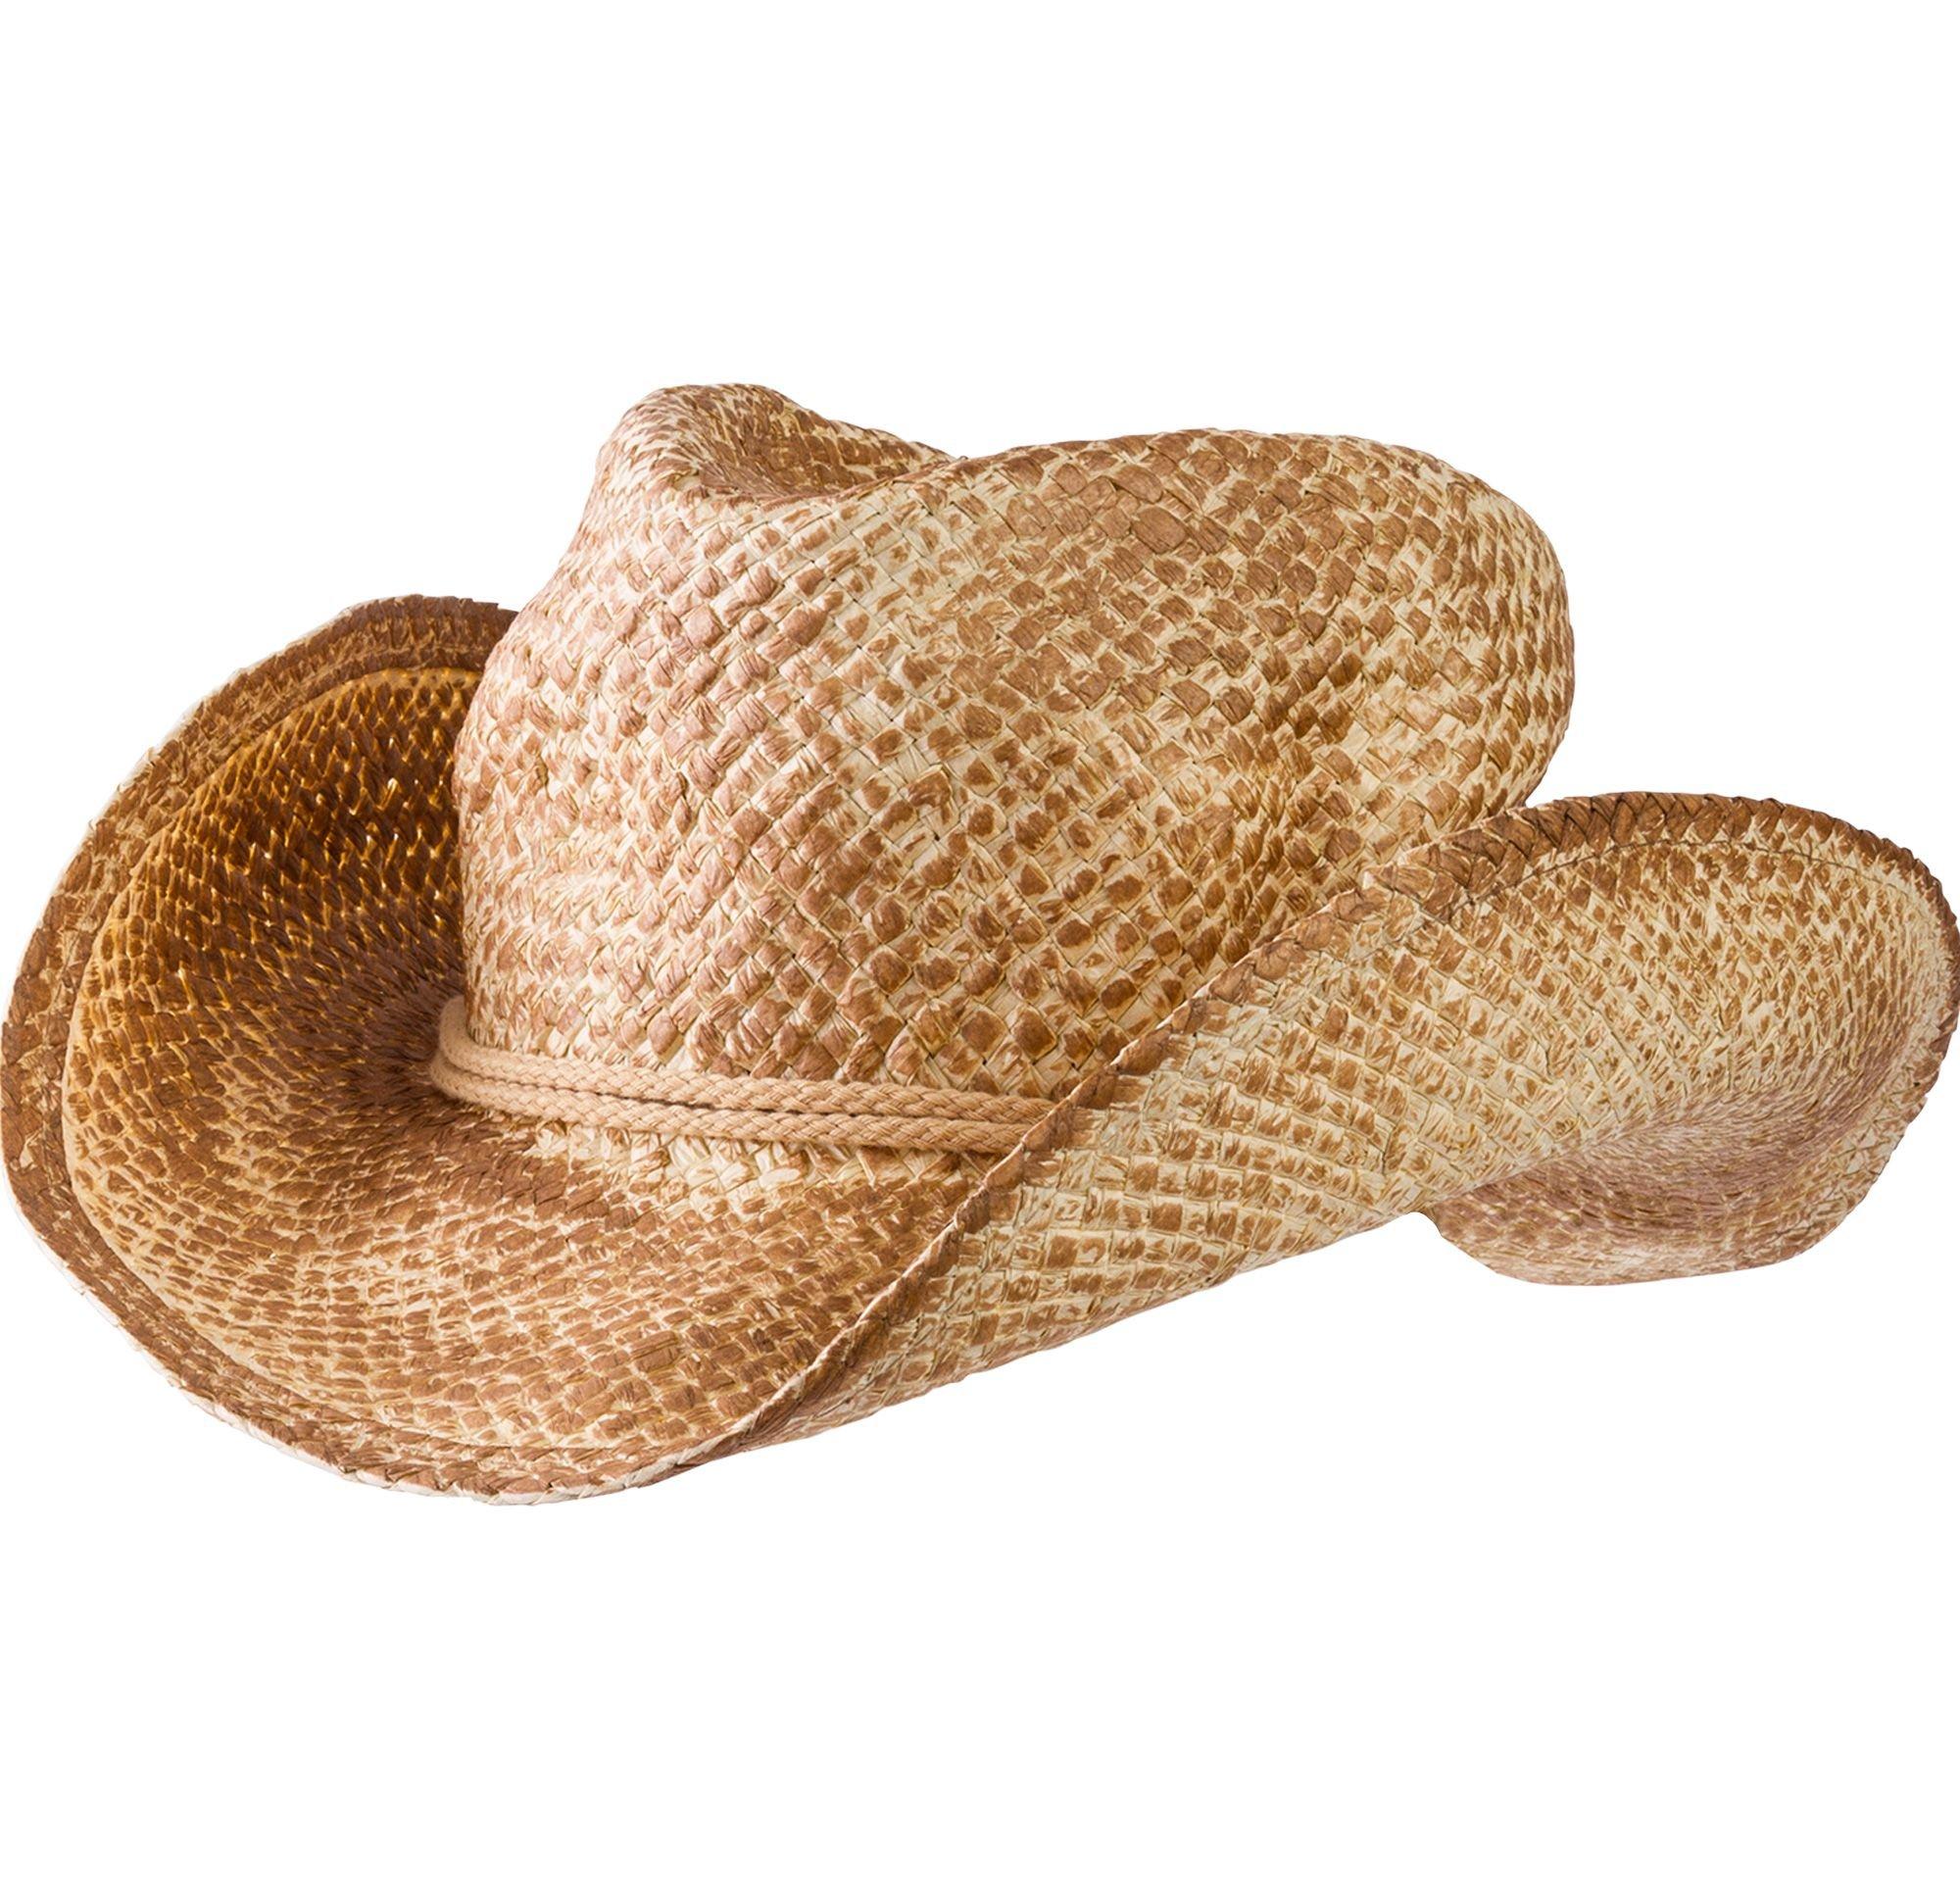 Straw Cowboy Hat 12in x 4 1/2in